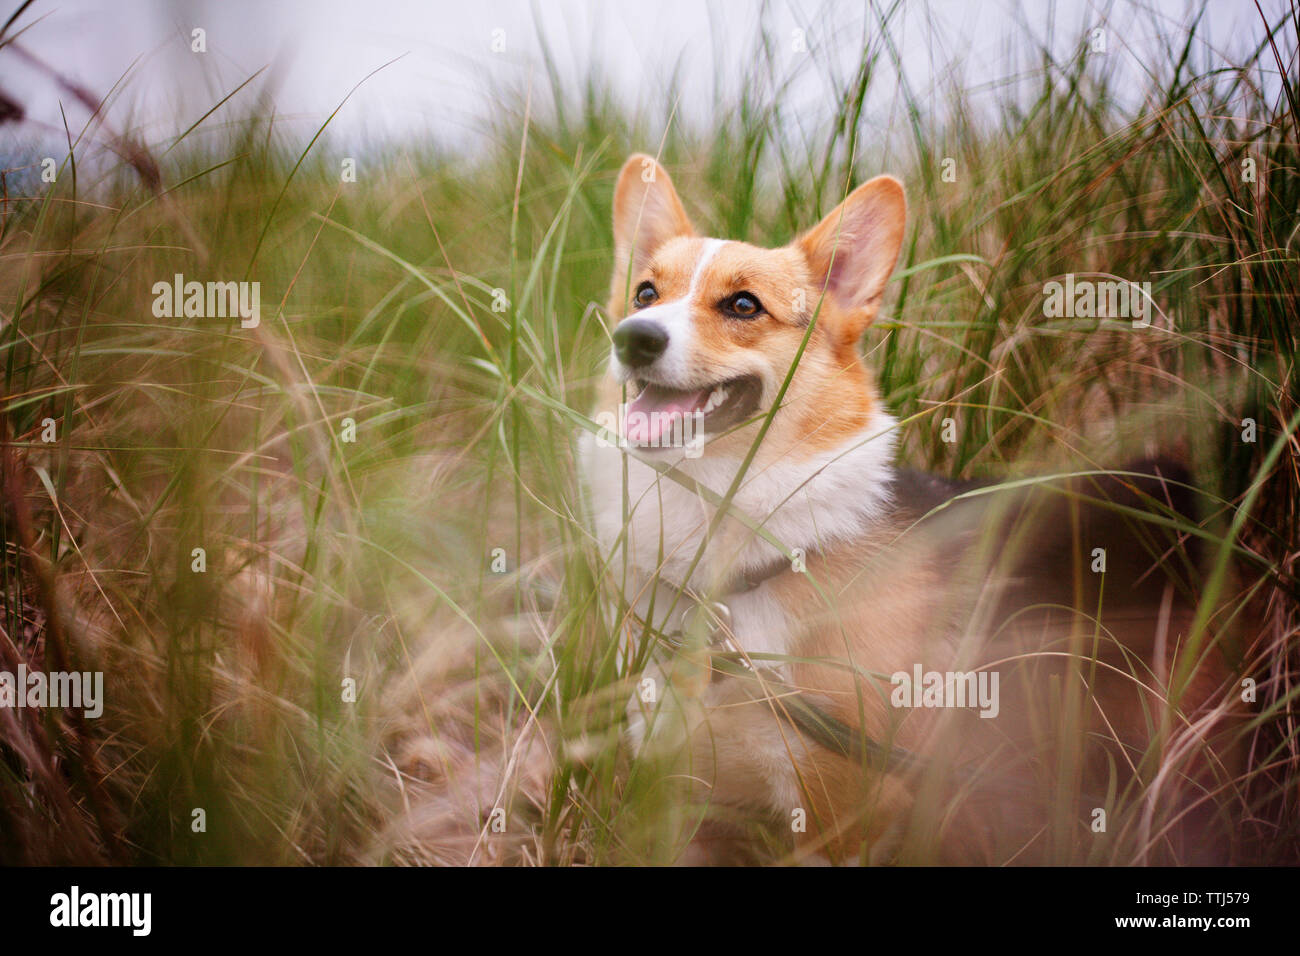 Corgi dog standing in grassy field Stock Photo